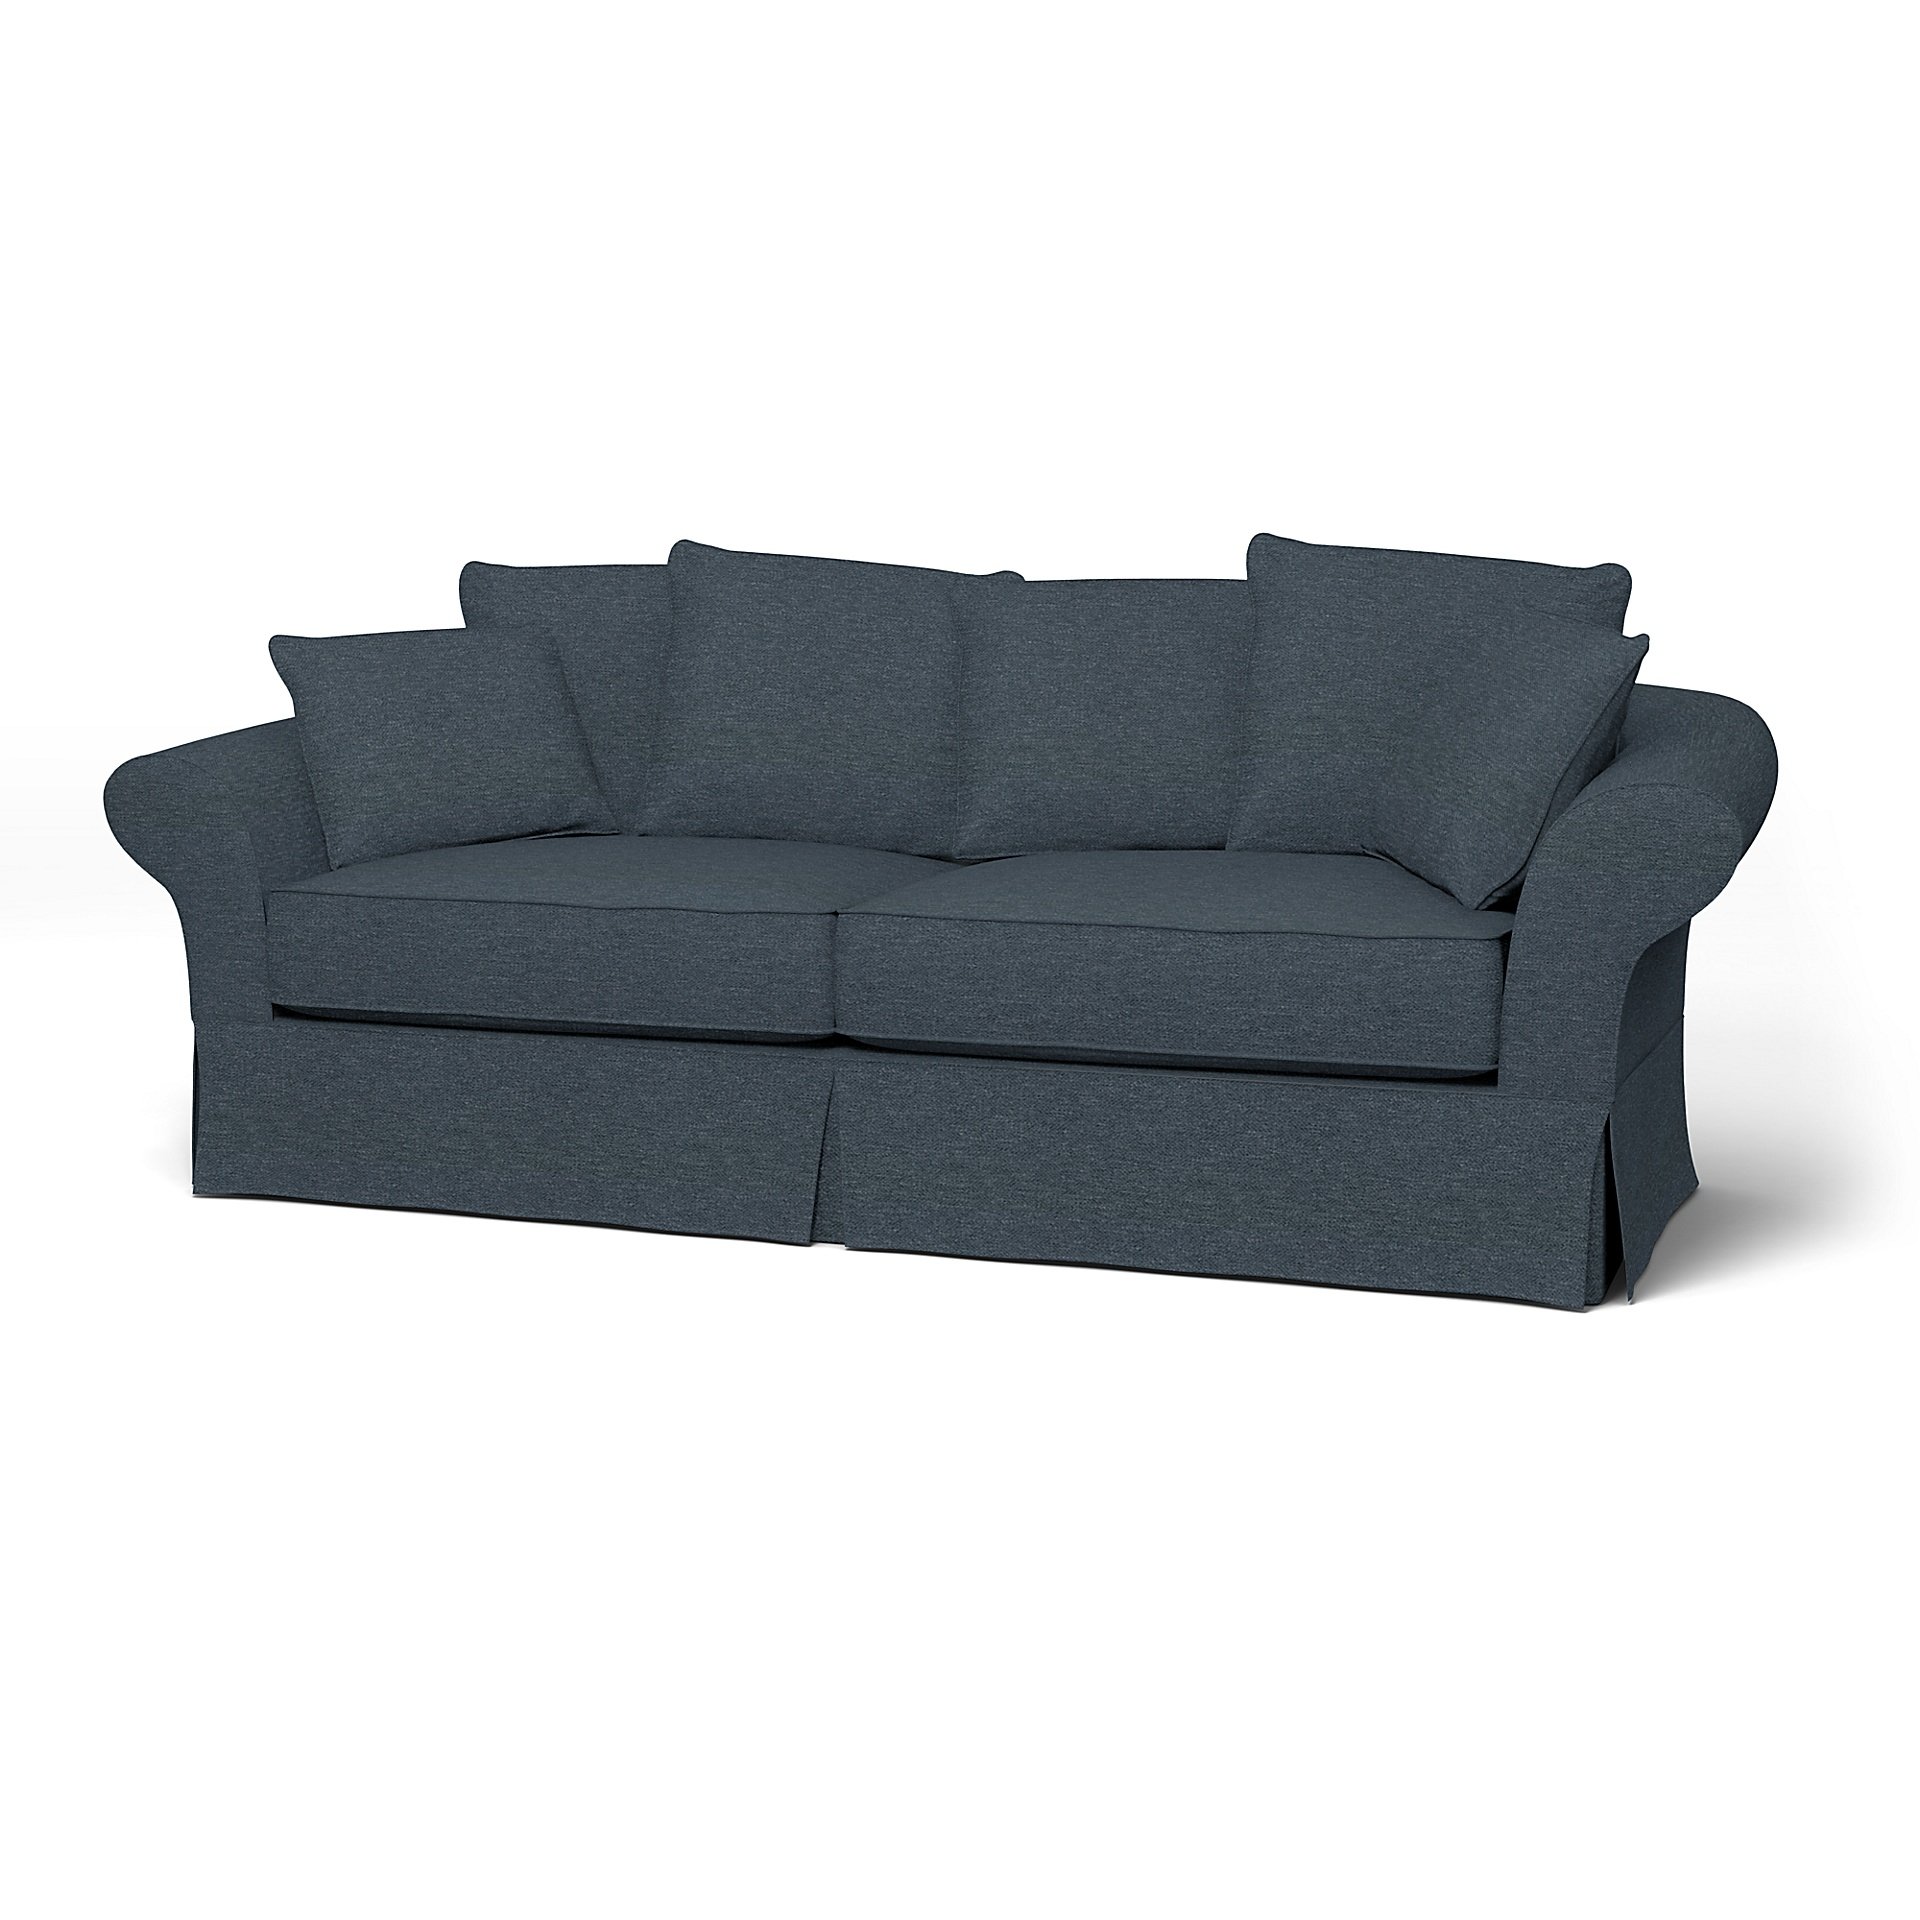 IKEA - Backamo 3 Seater Sofa Cover, Denim, Boucle & Texture - Bemz